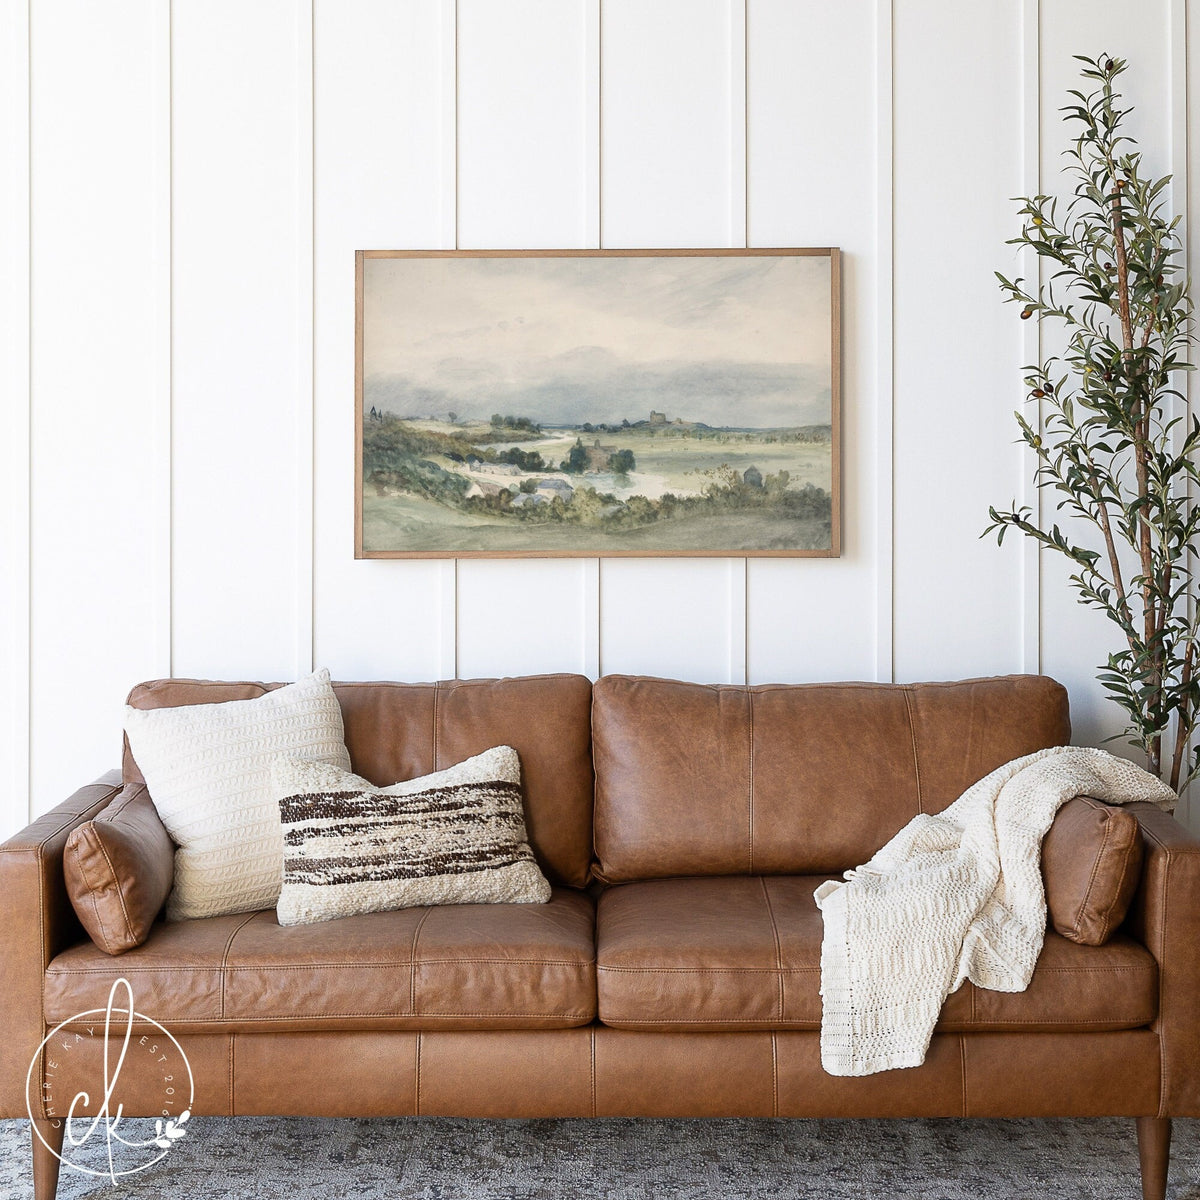 Landscape Wall Art | Vintage Wall Art | Framed Wall Art | Living Room Decor | Wood Framed Art | Scenic Landscape Painting